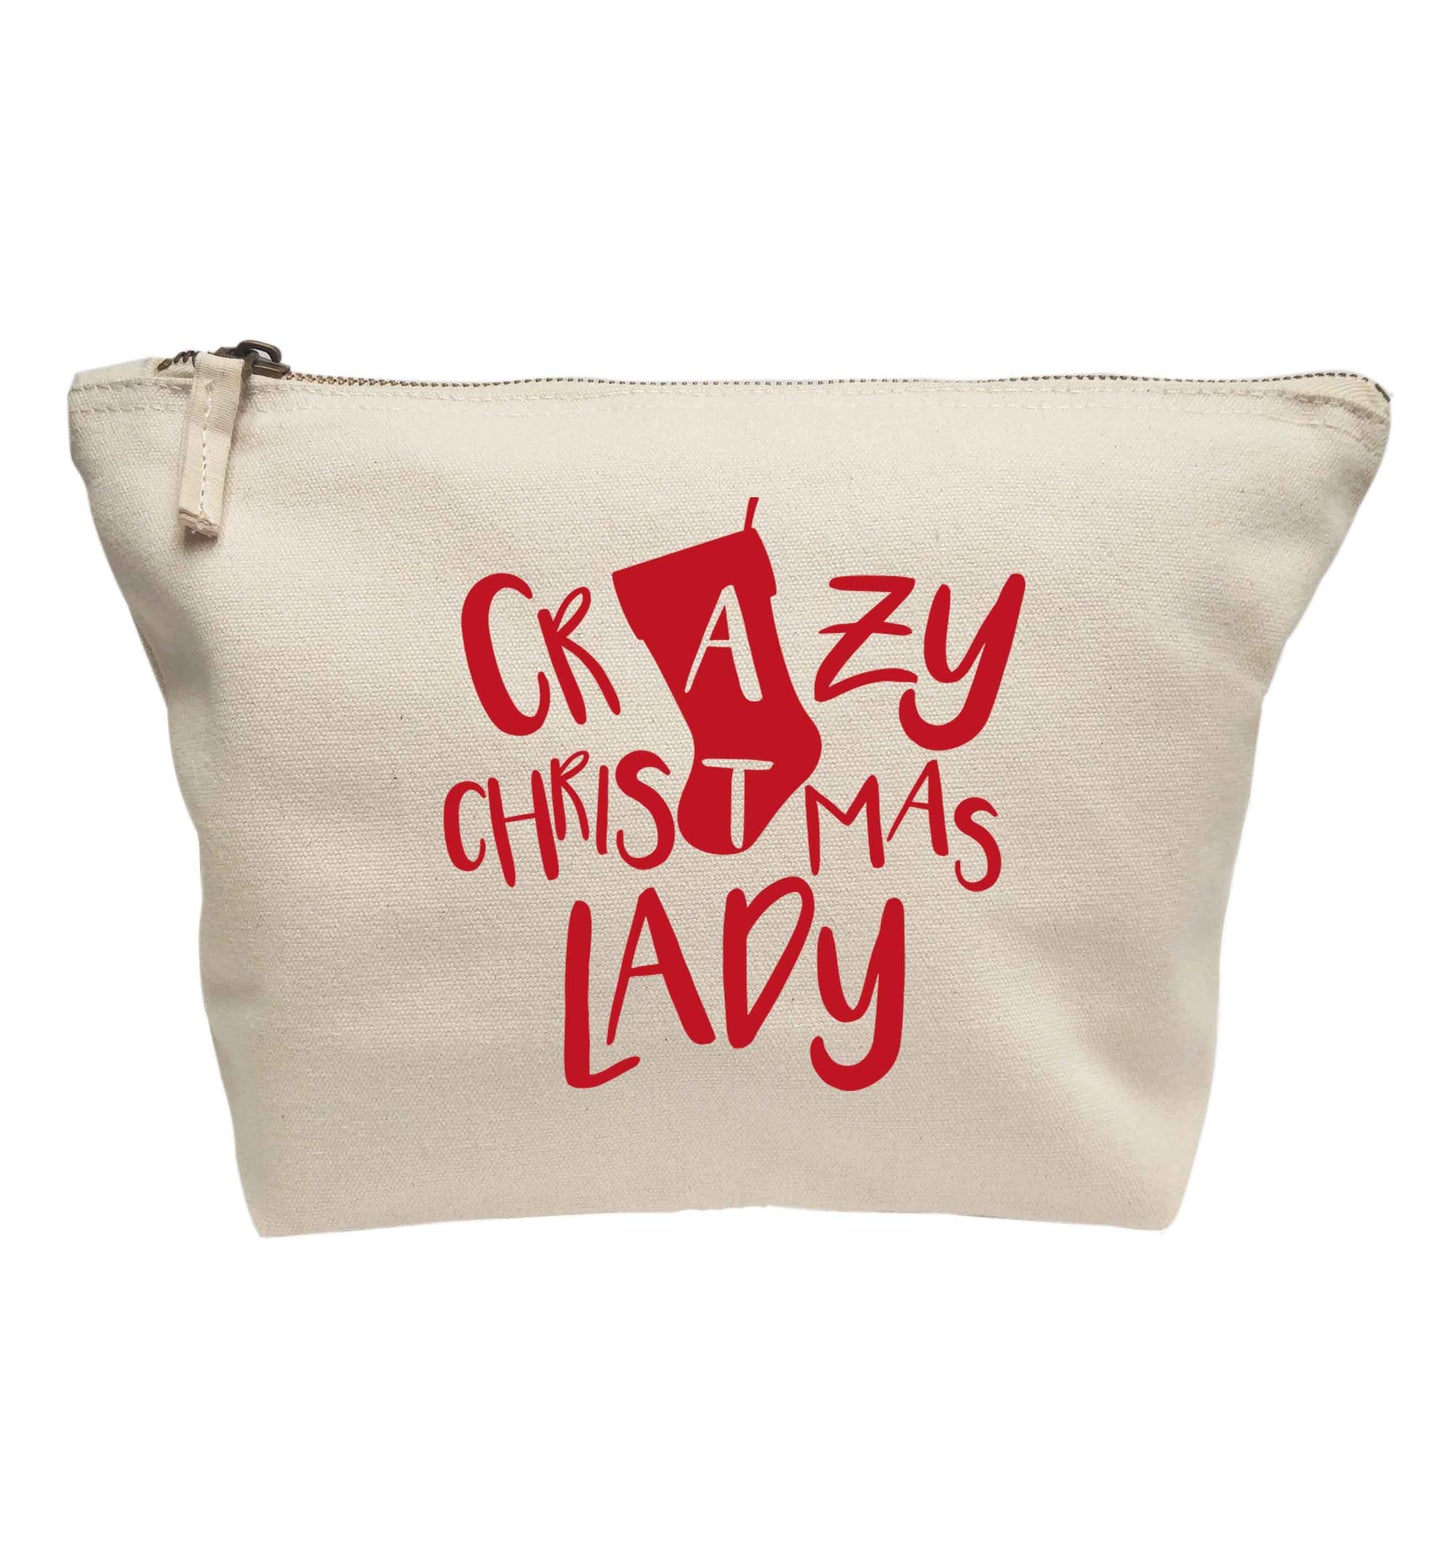 Crazy Christmas lady | Makeup / wash bag